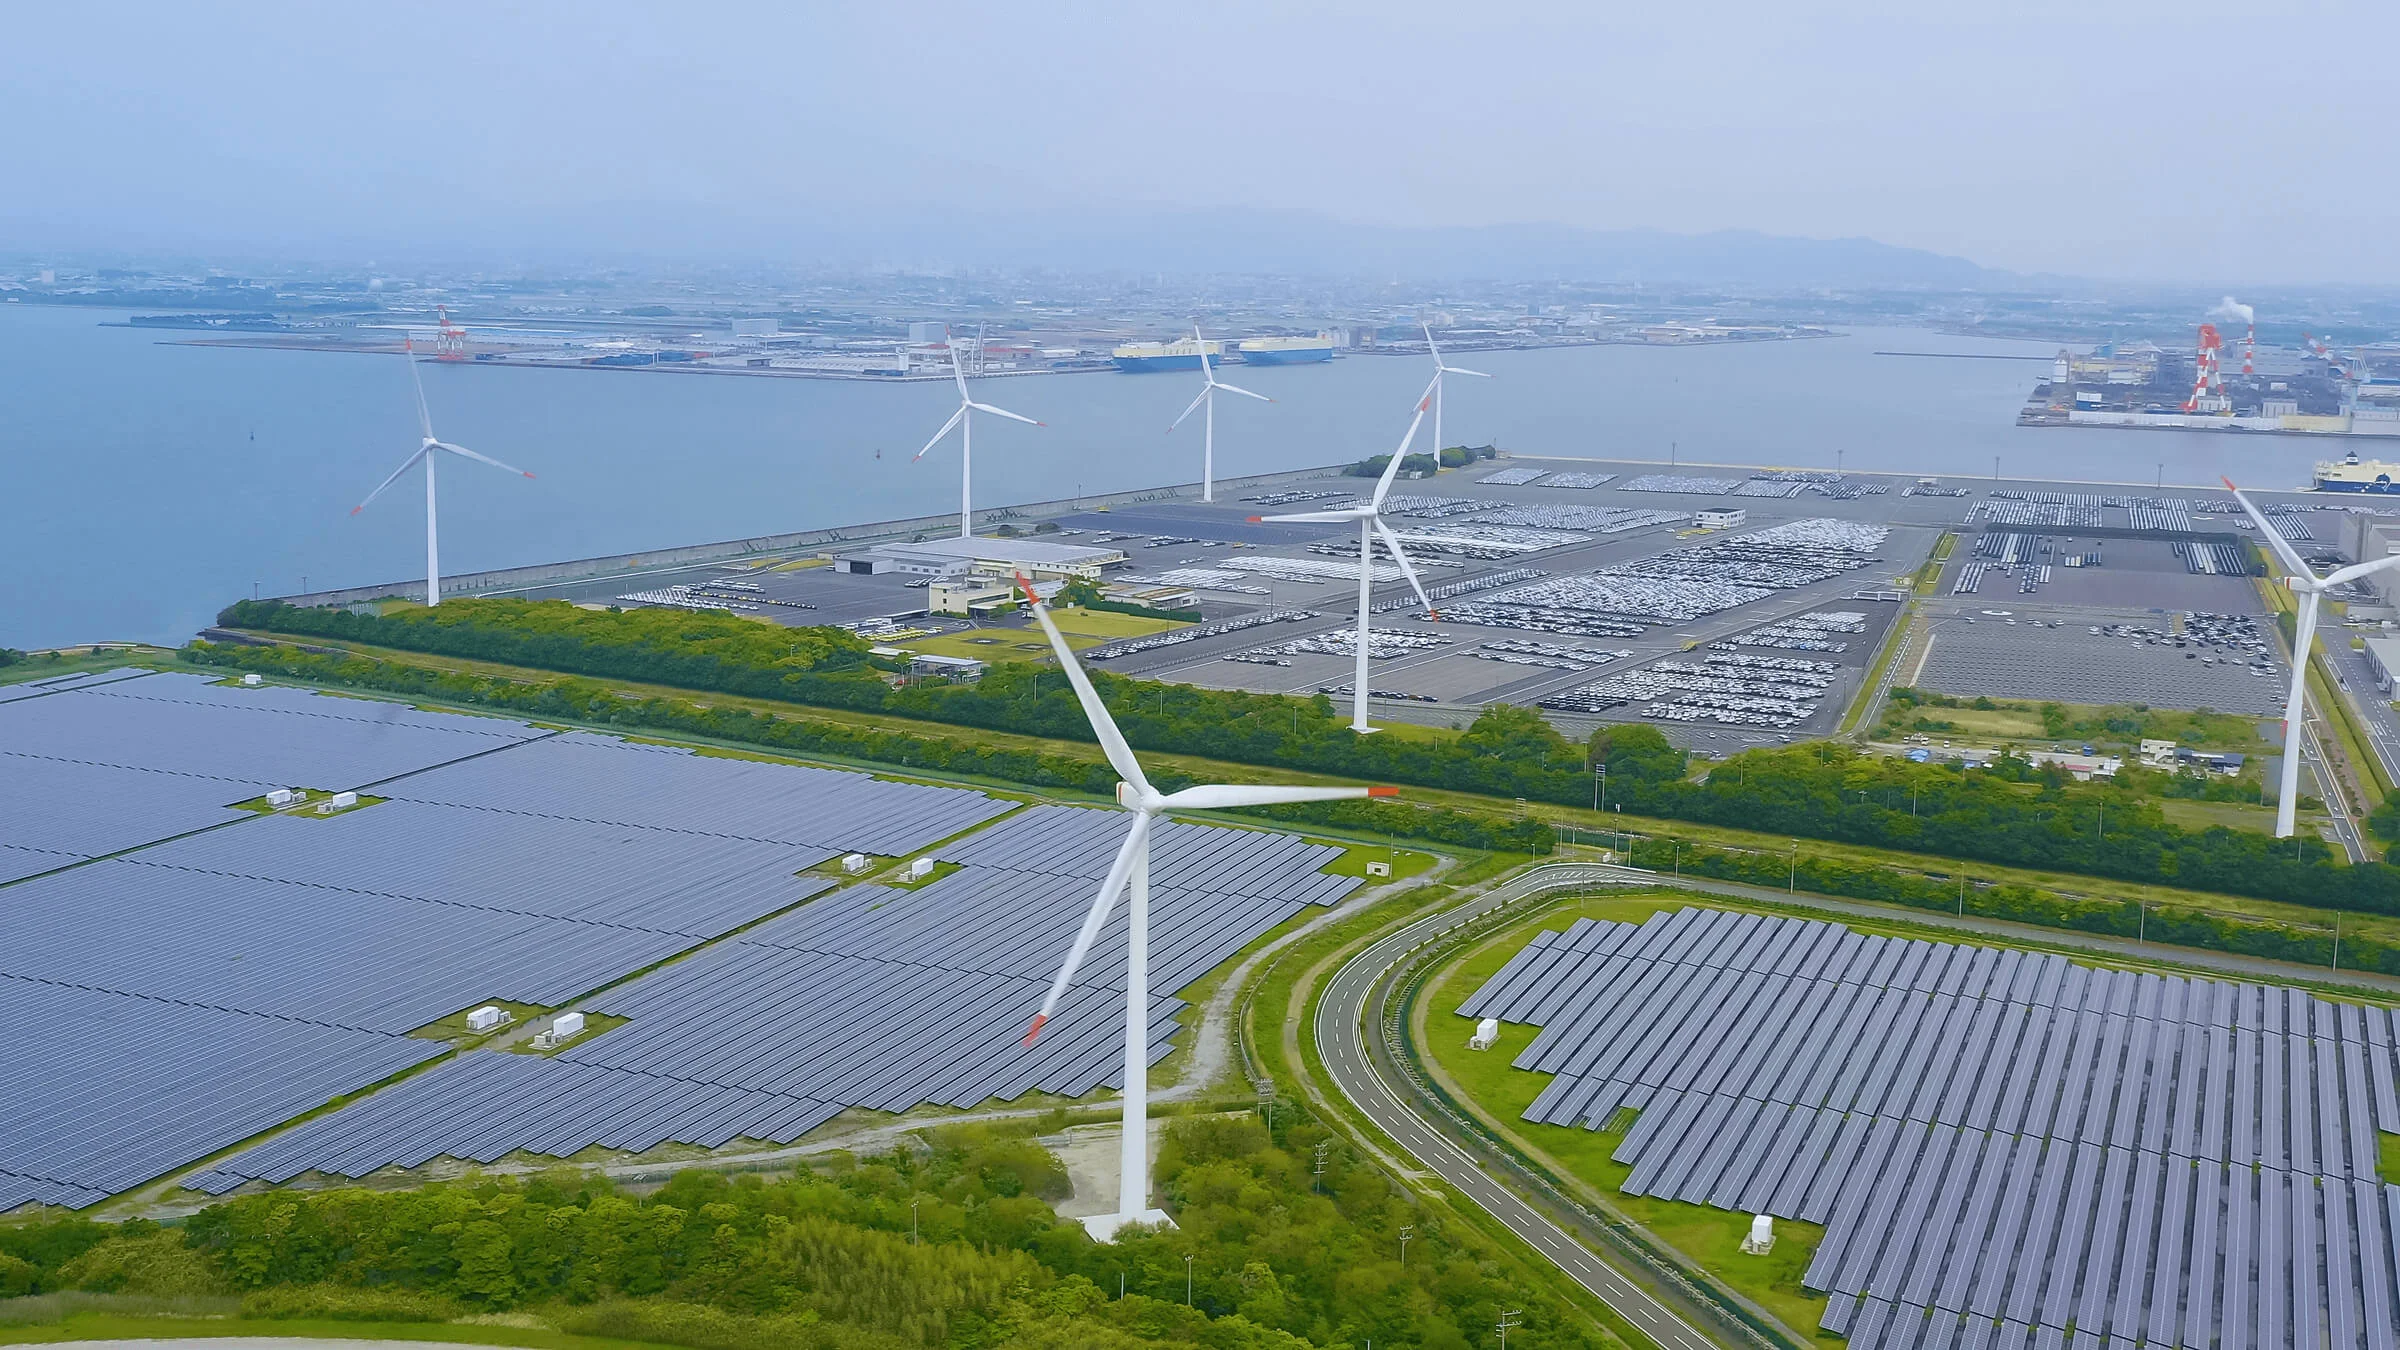 A large scale solar and wind farm near a port.